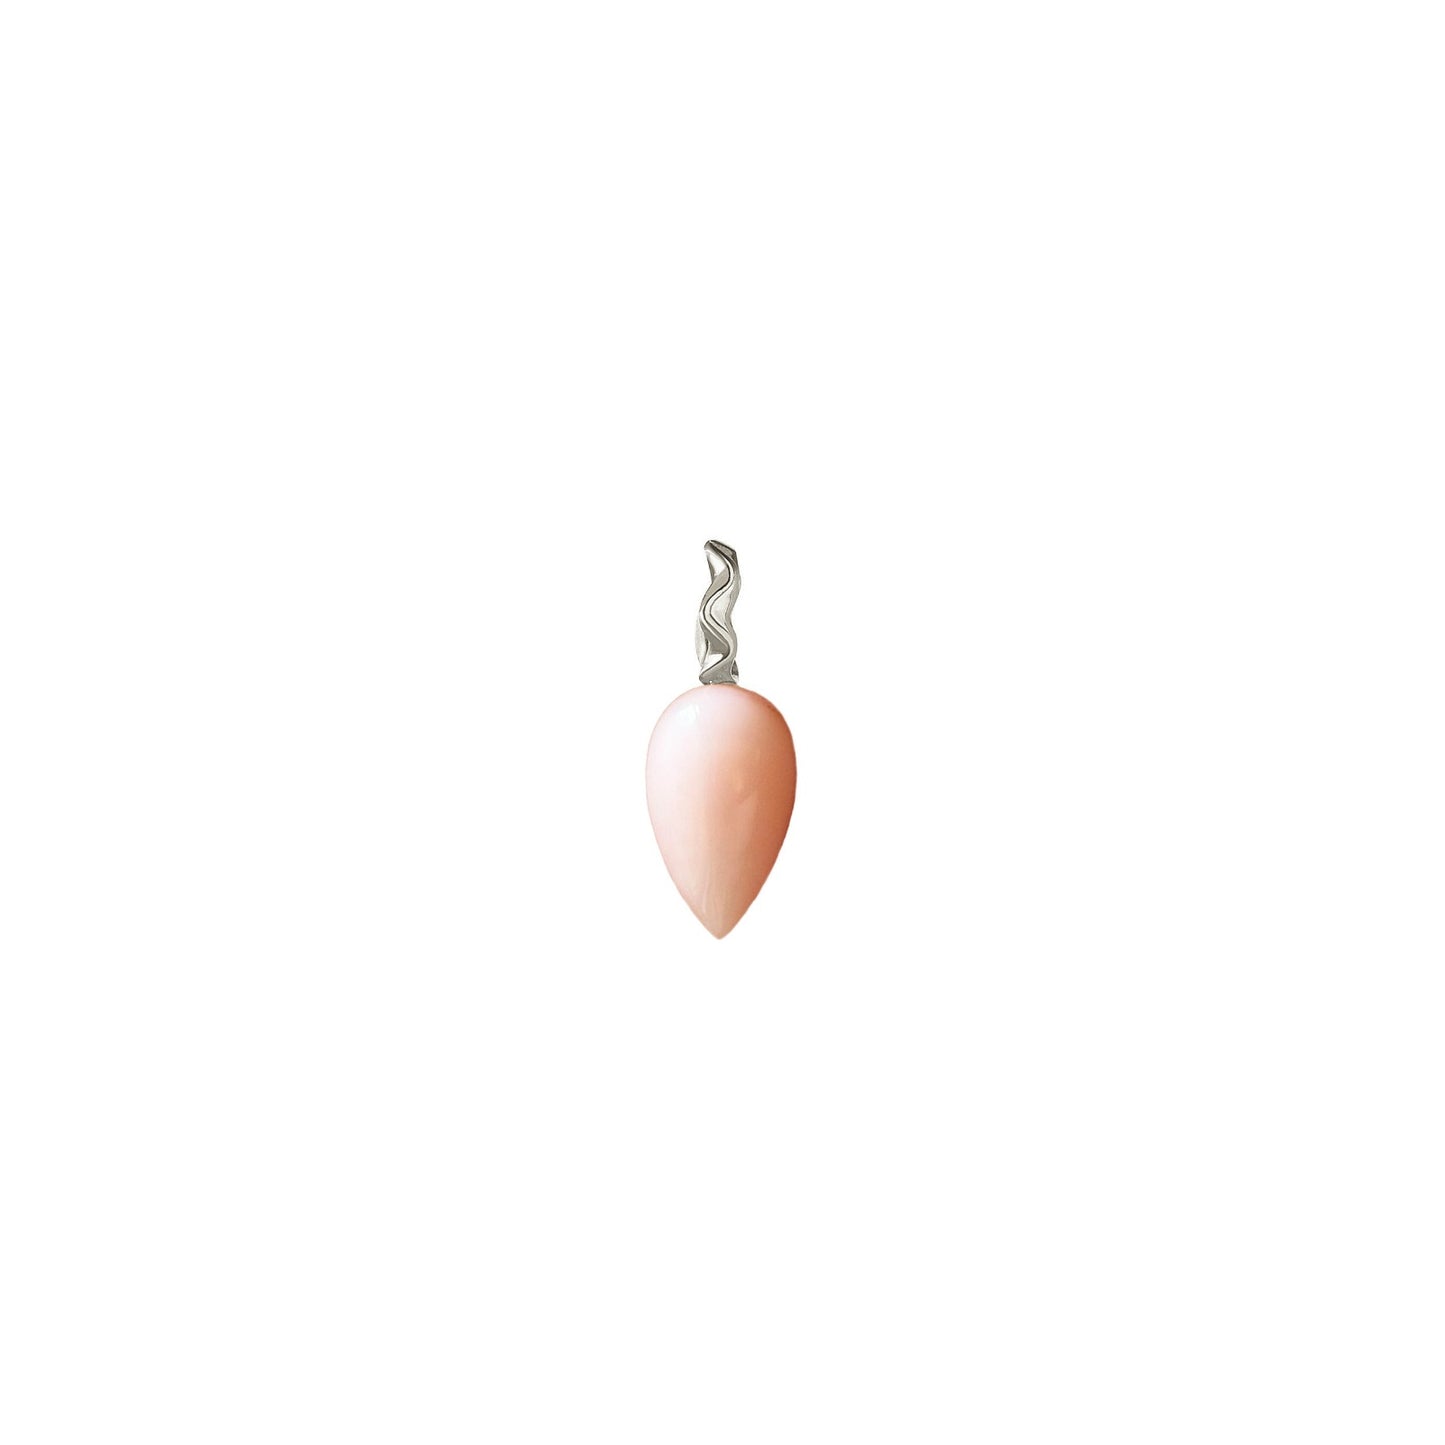 Peruvian pink opal acorn drop charm with 14k white gold bail.